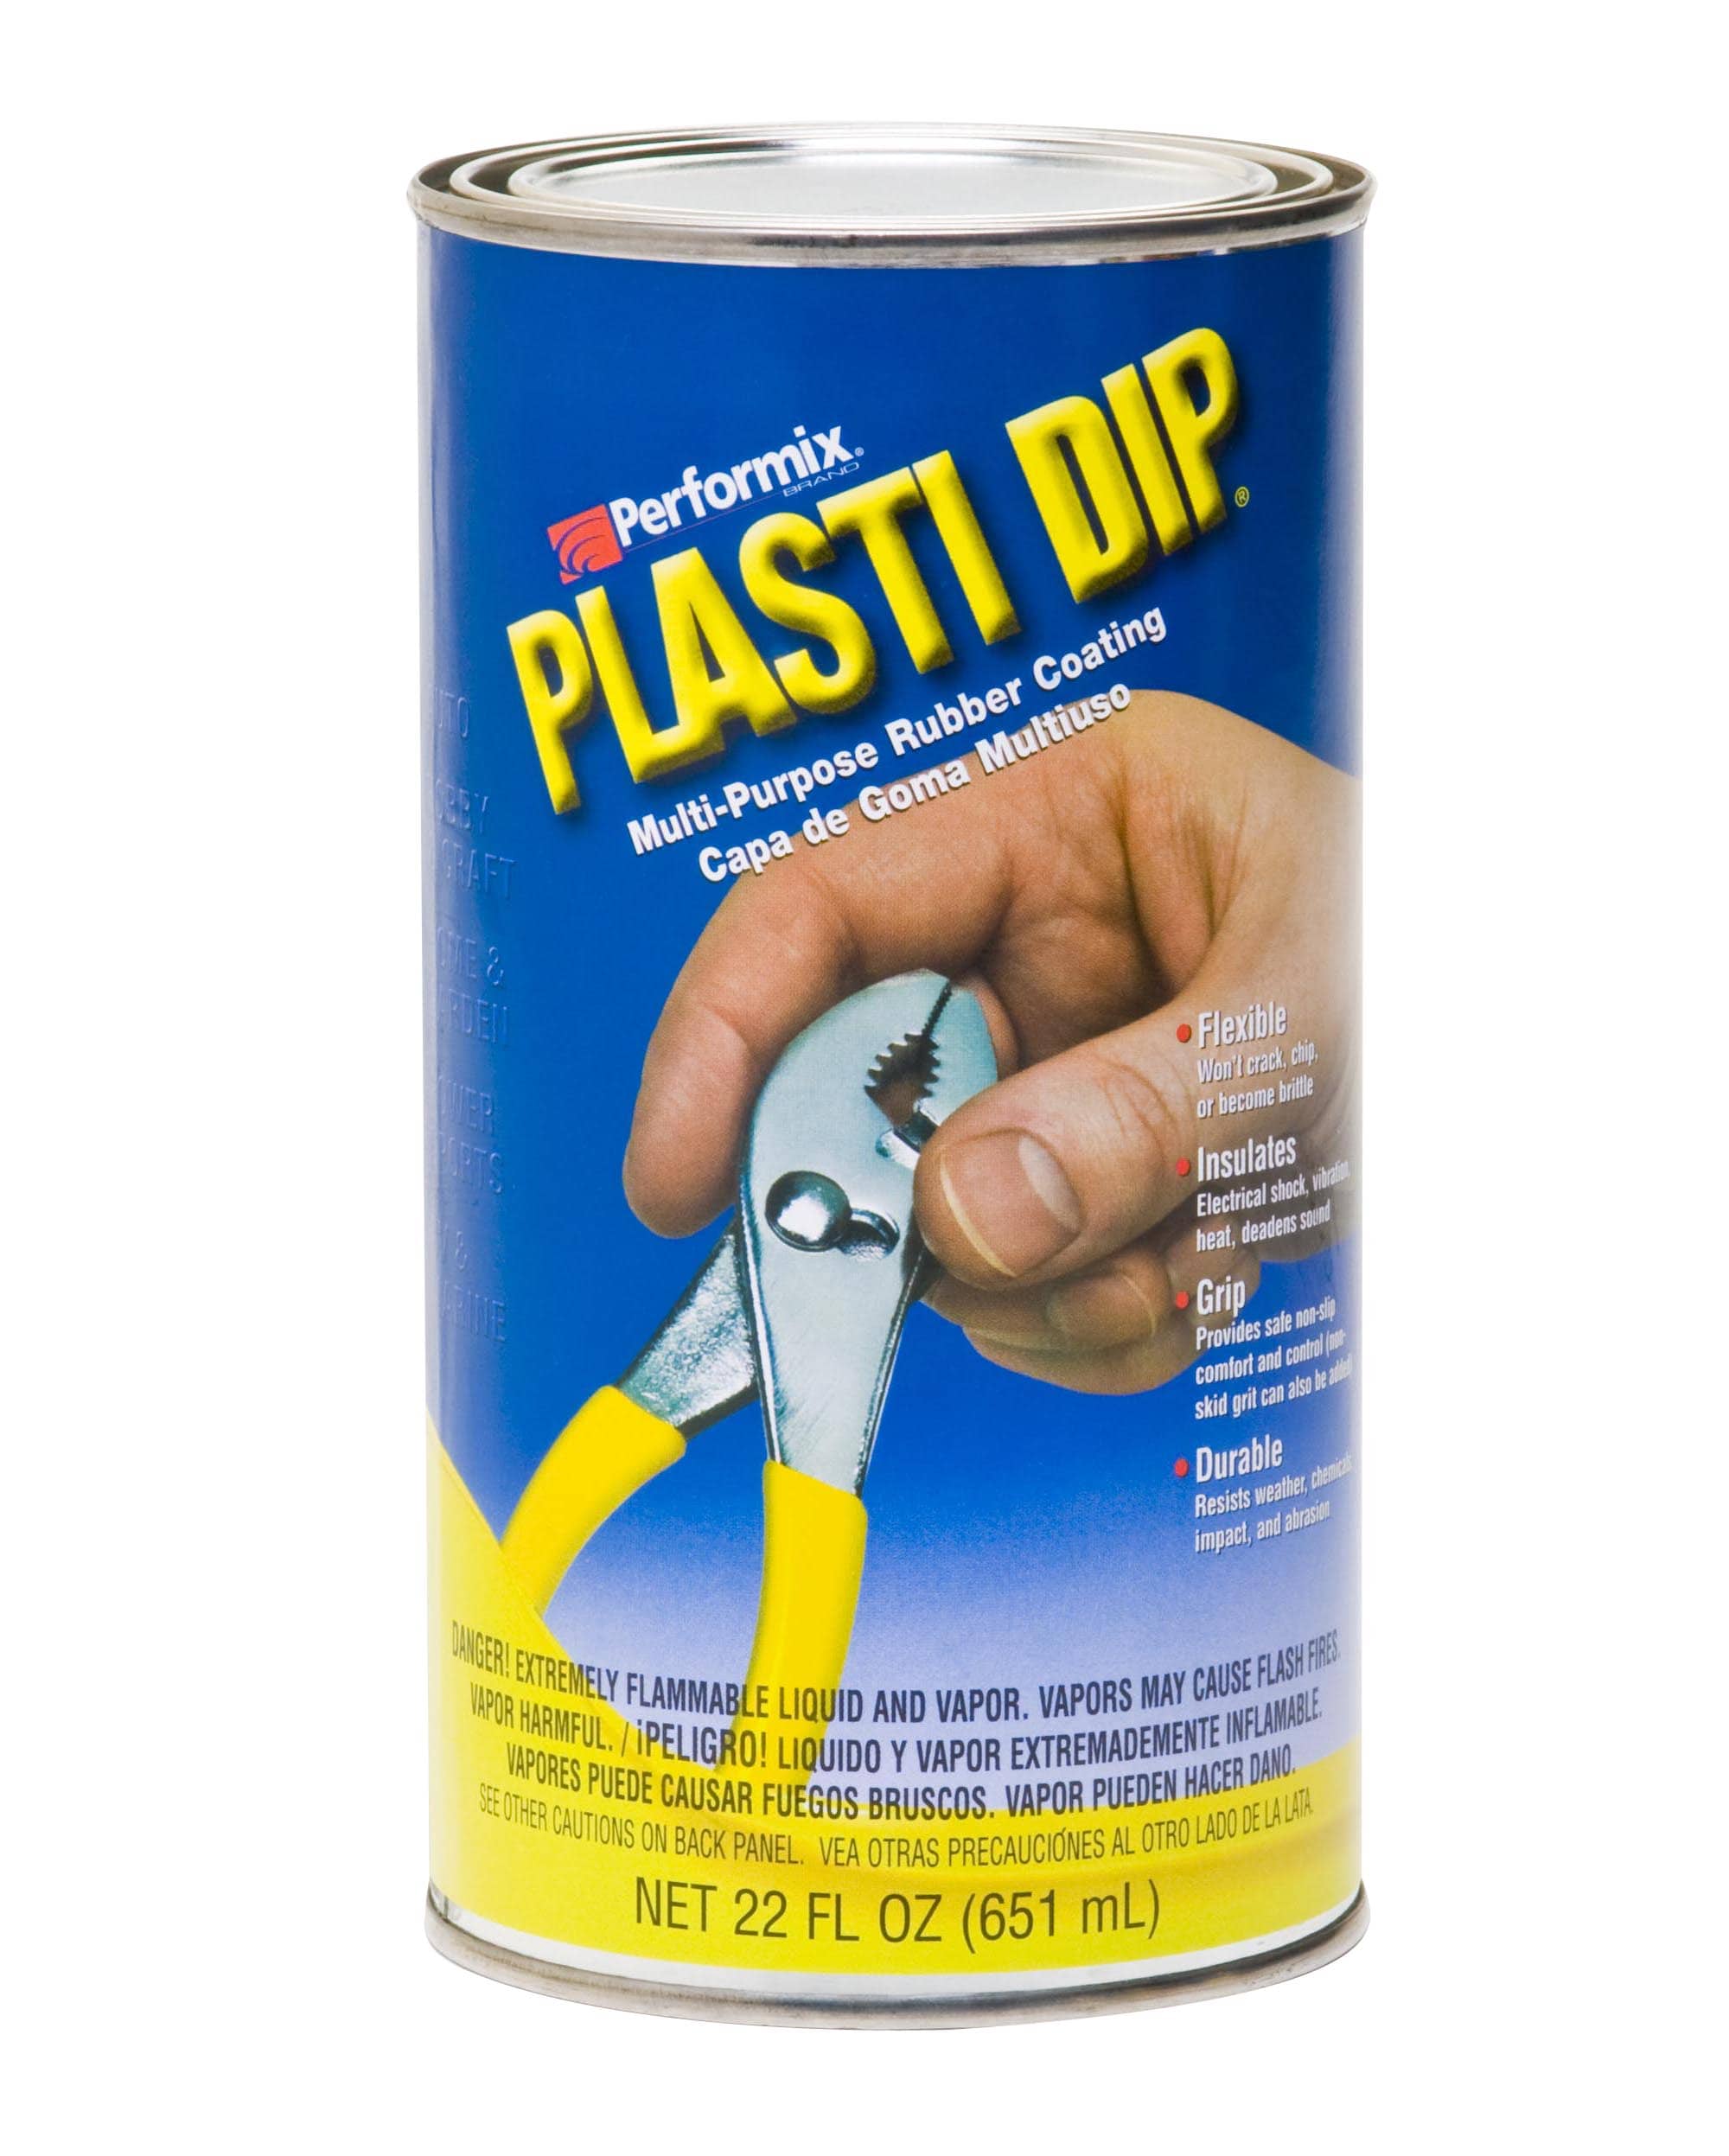 Plasti Dip blue dip can 14.5-fl oz Blue Dip Rubberized Coating (6